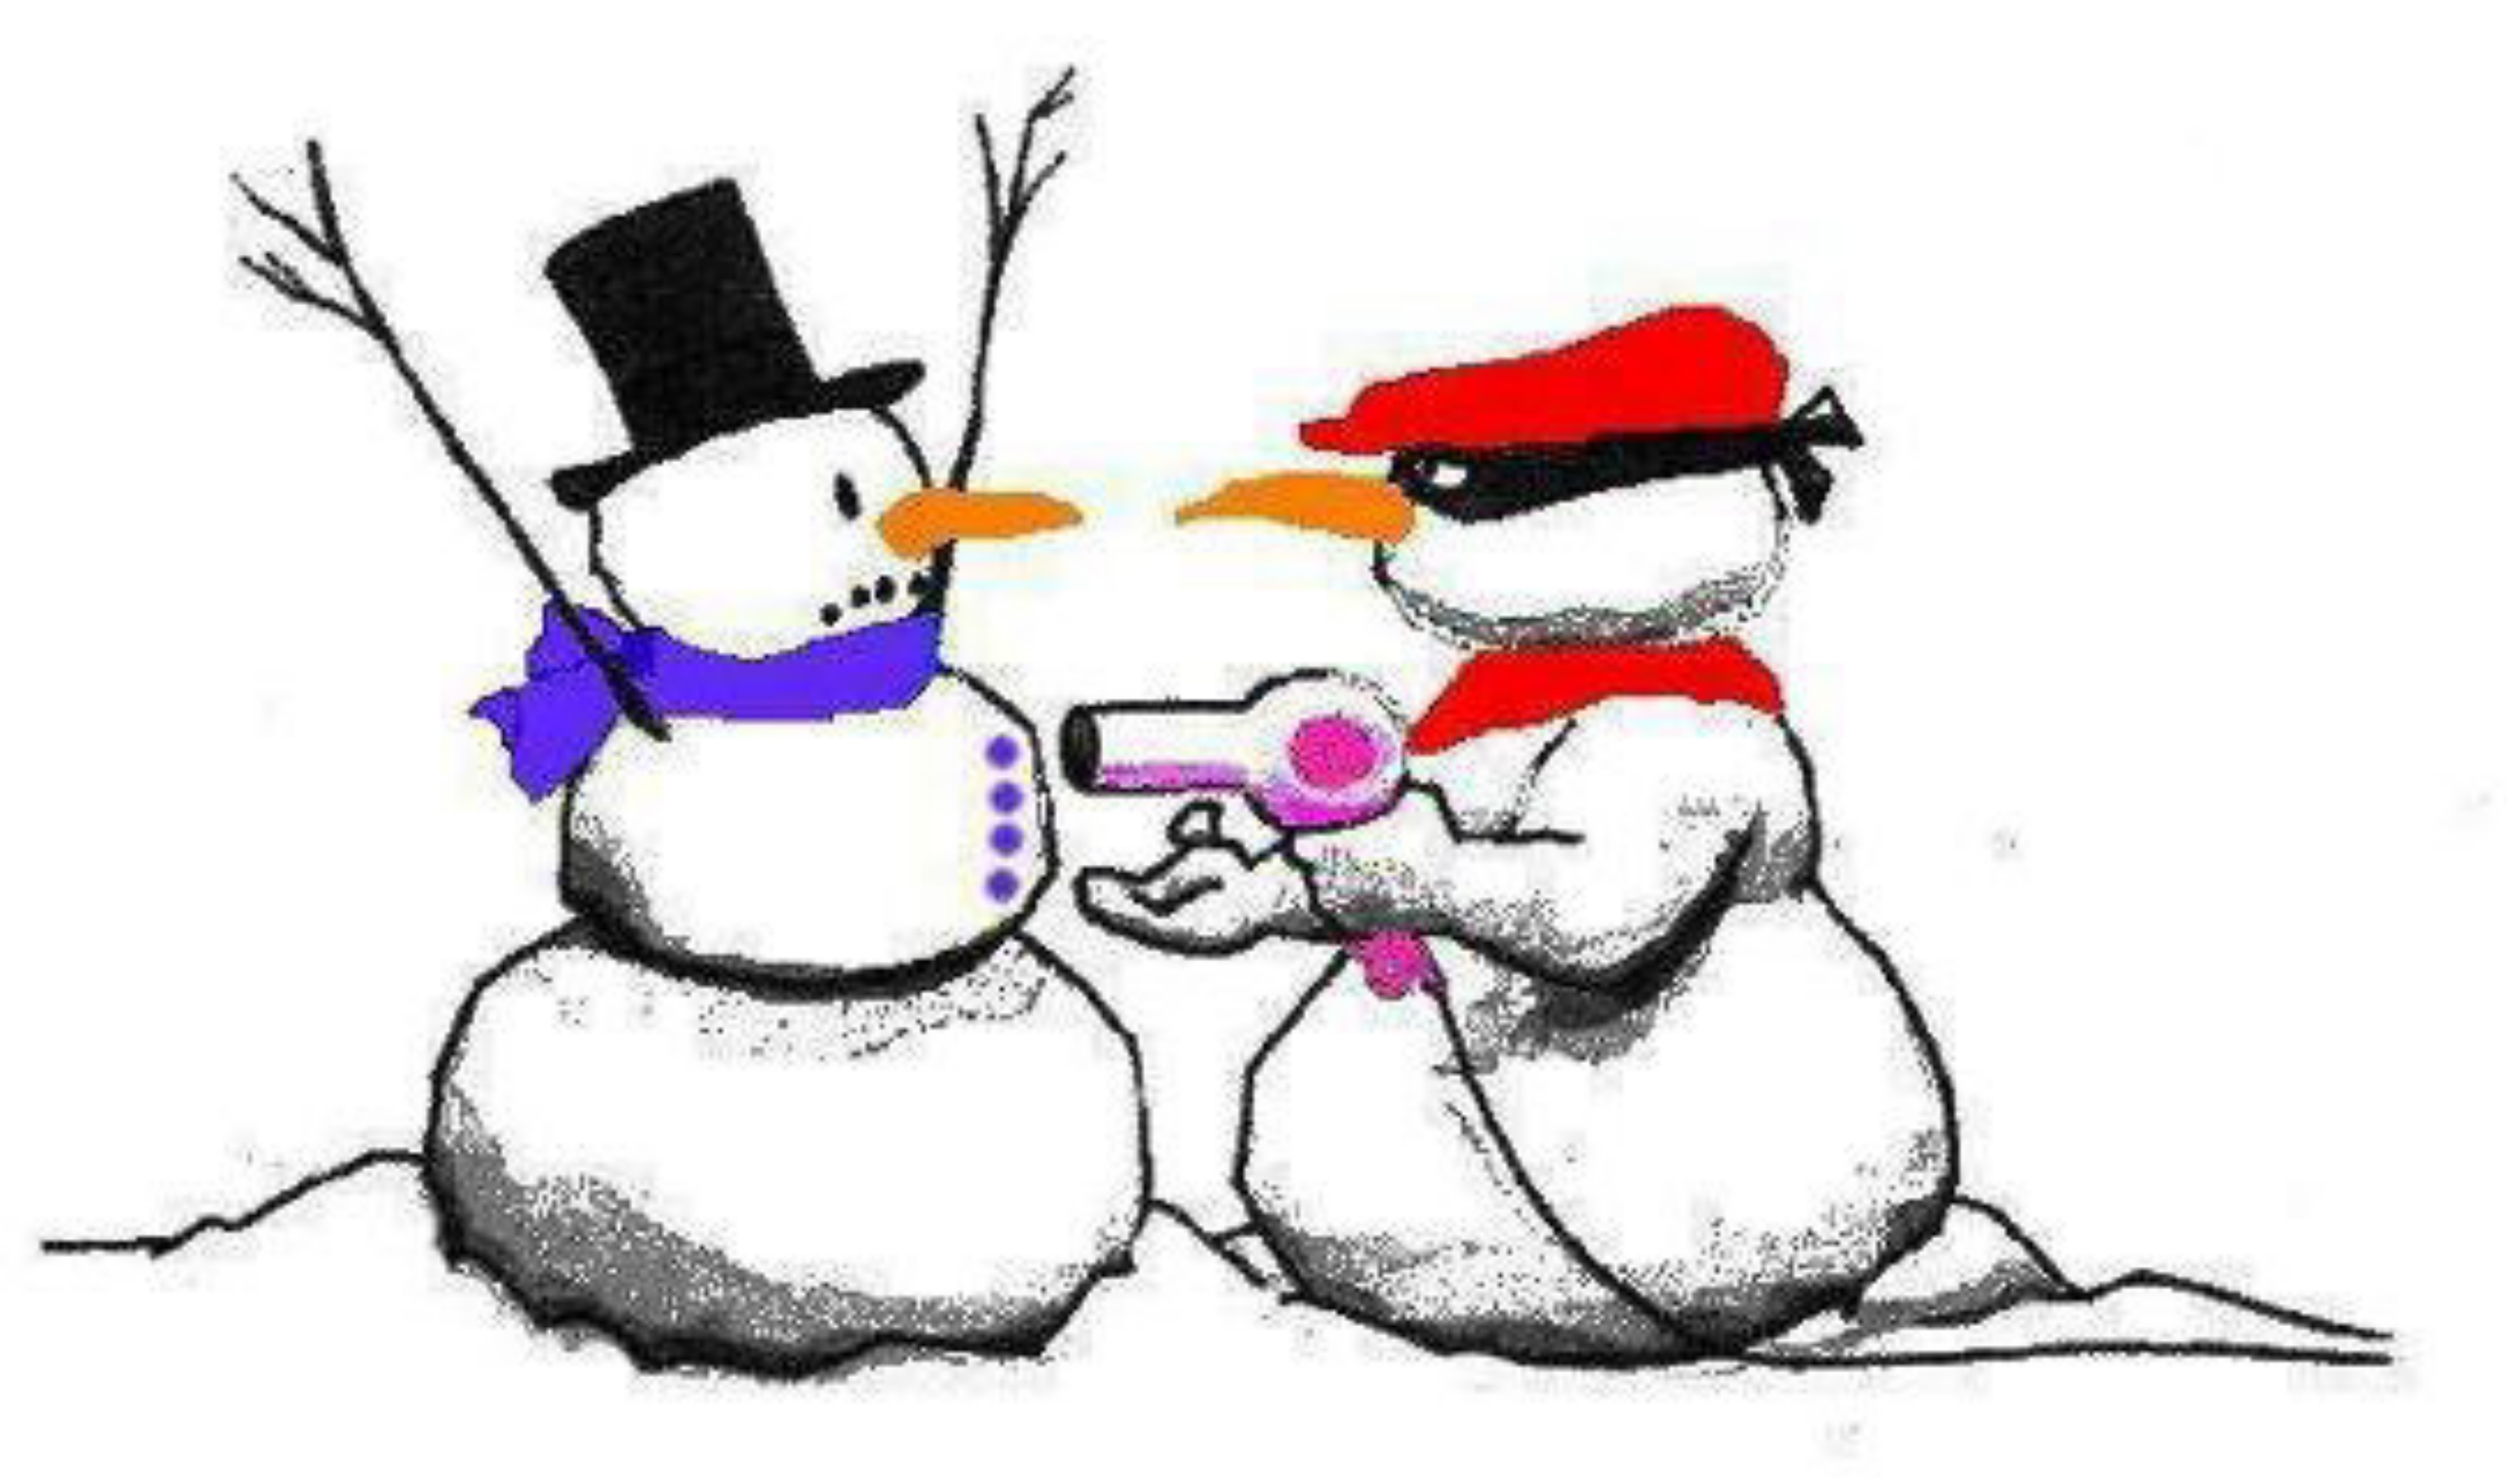 clipart snowman silly